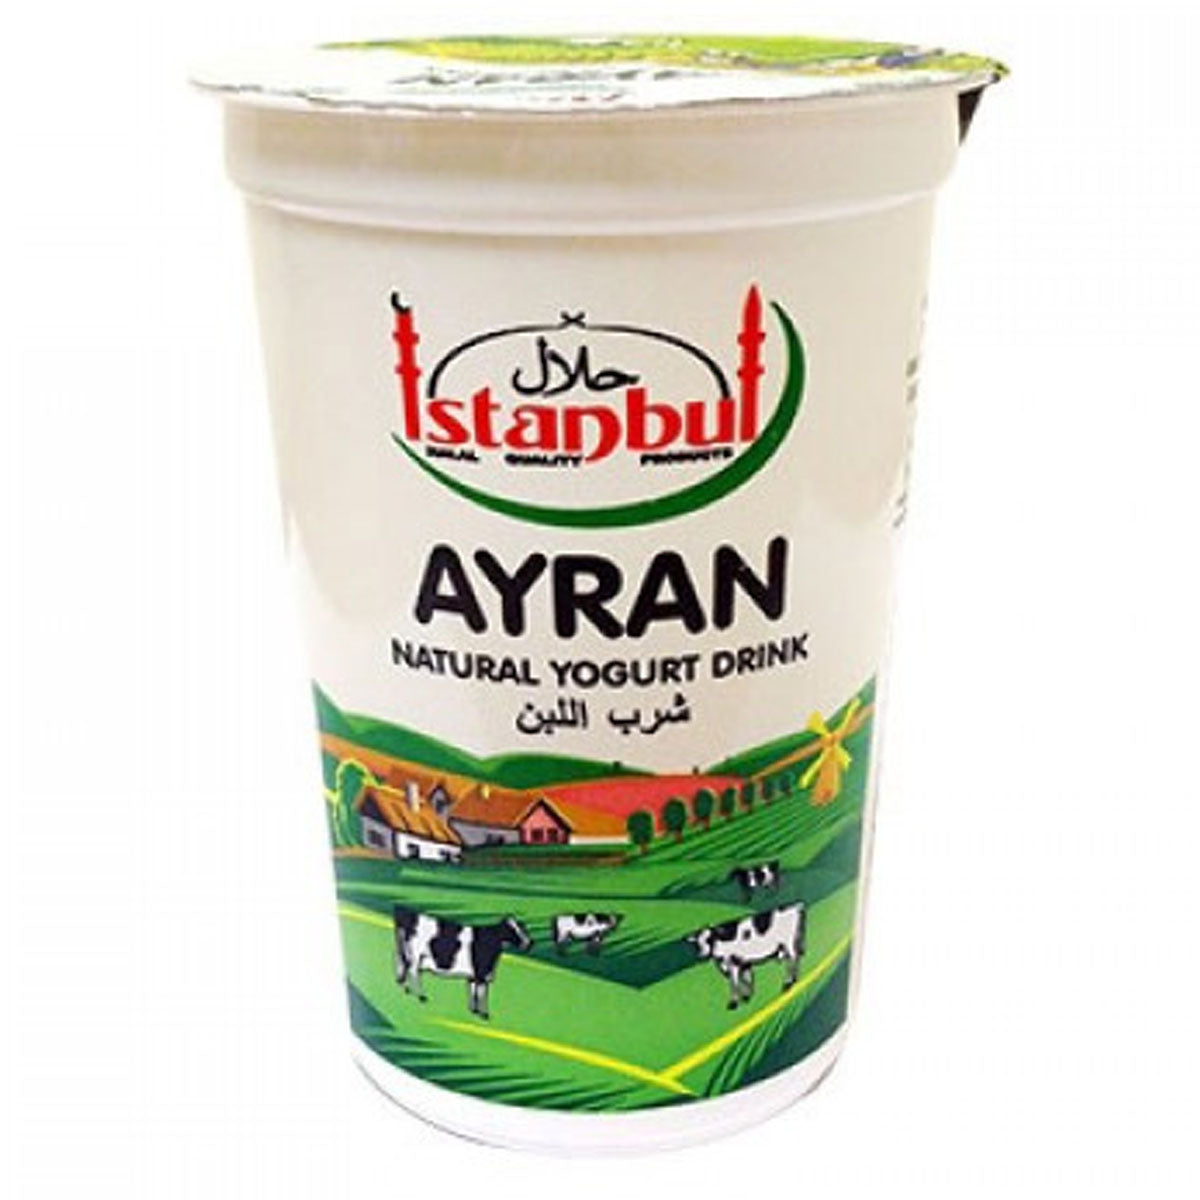 Istanbul - Ayran Yoghurt Drink - 250ml in a cup.